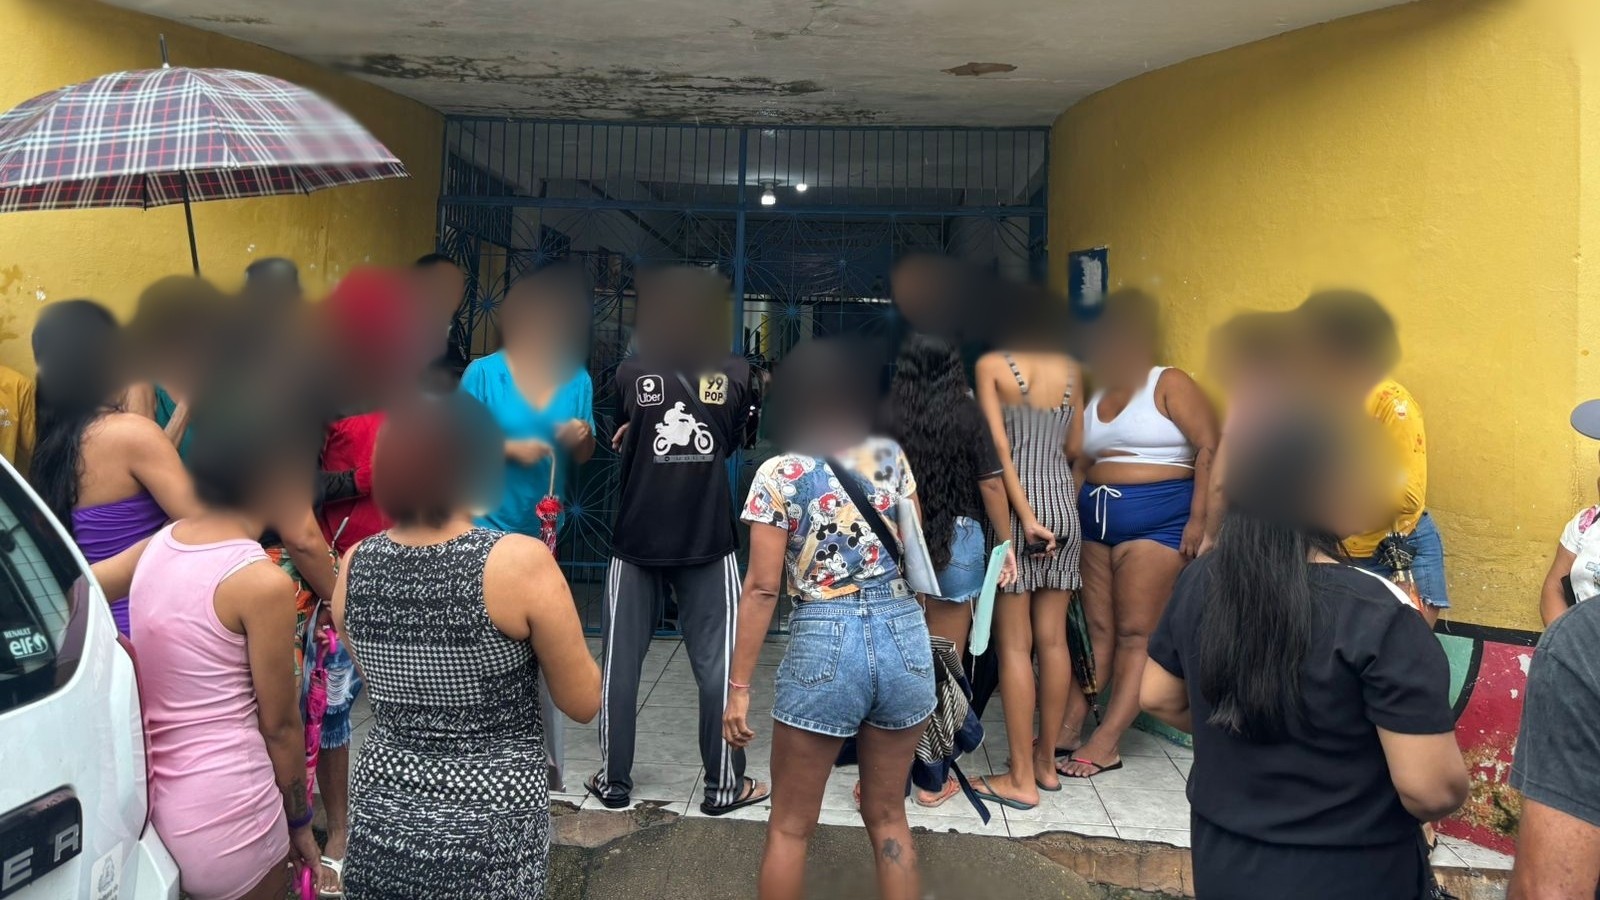 Aluna de 4 anos sofreu violência sexual de professor dentro de escola em Fortaleza, denuncia mãe